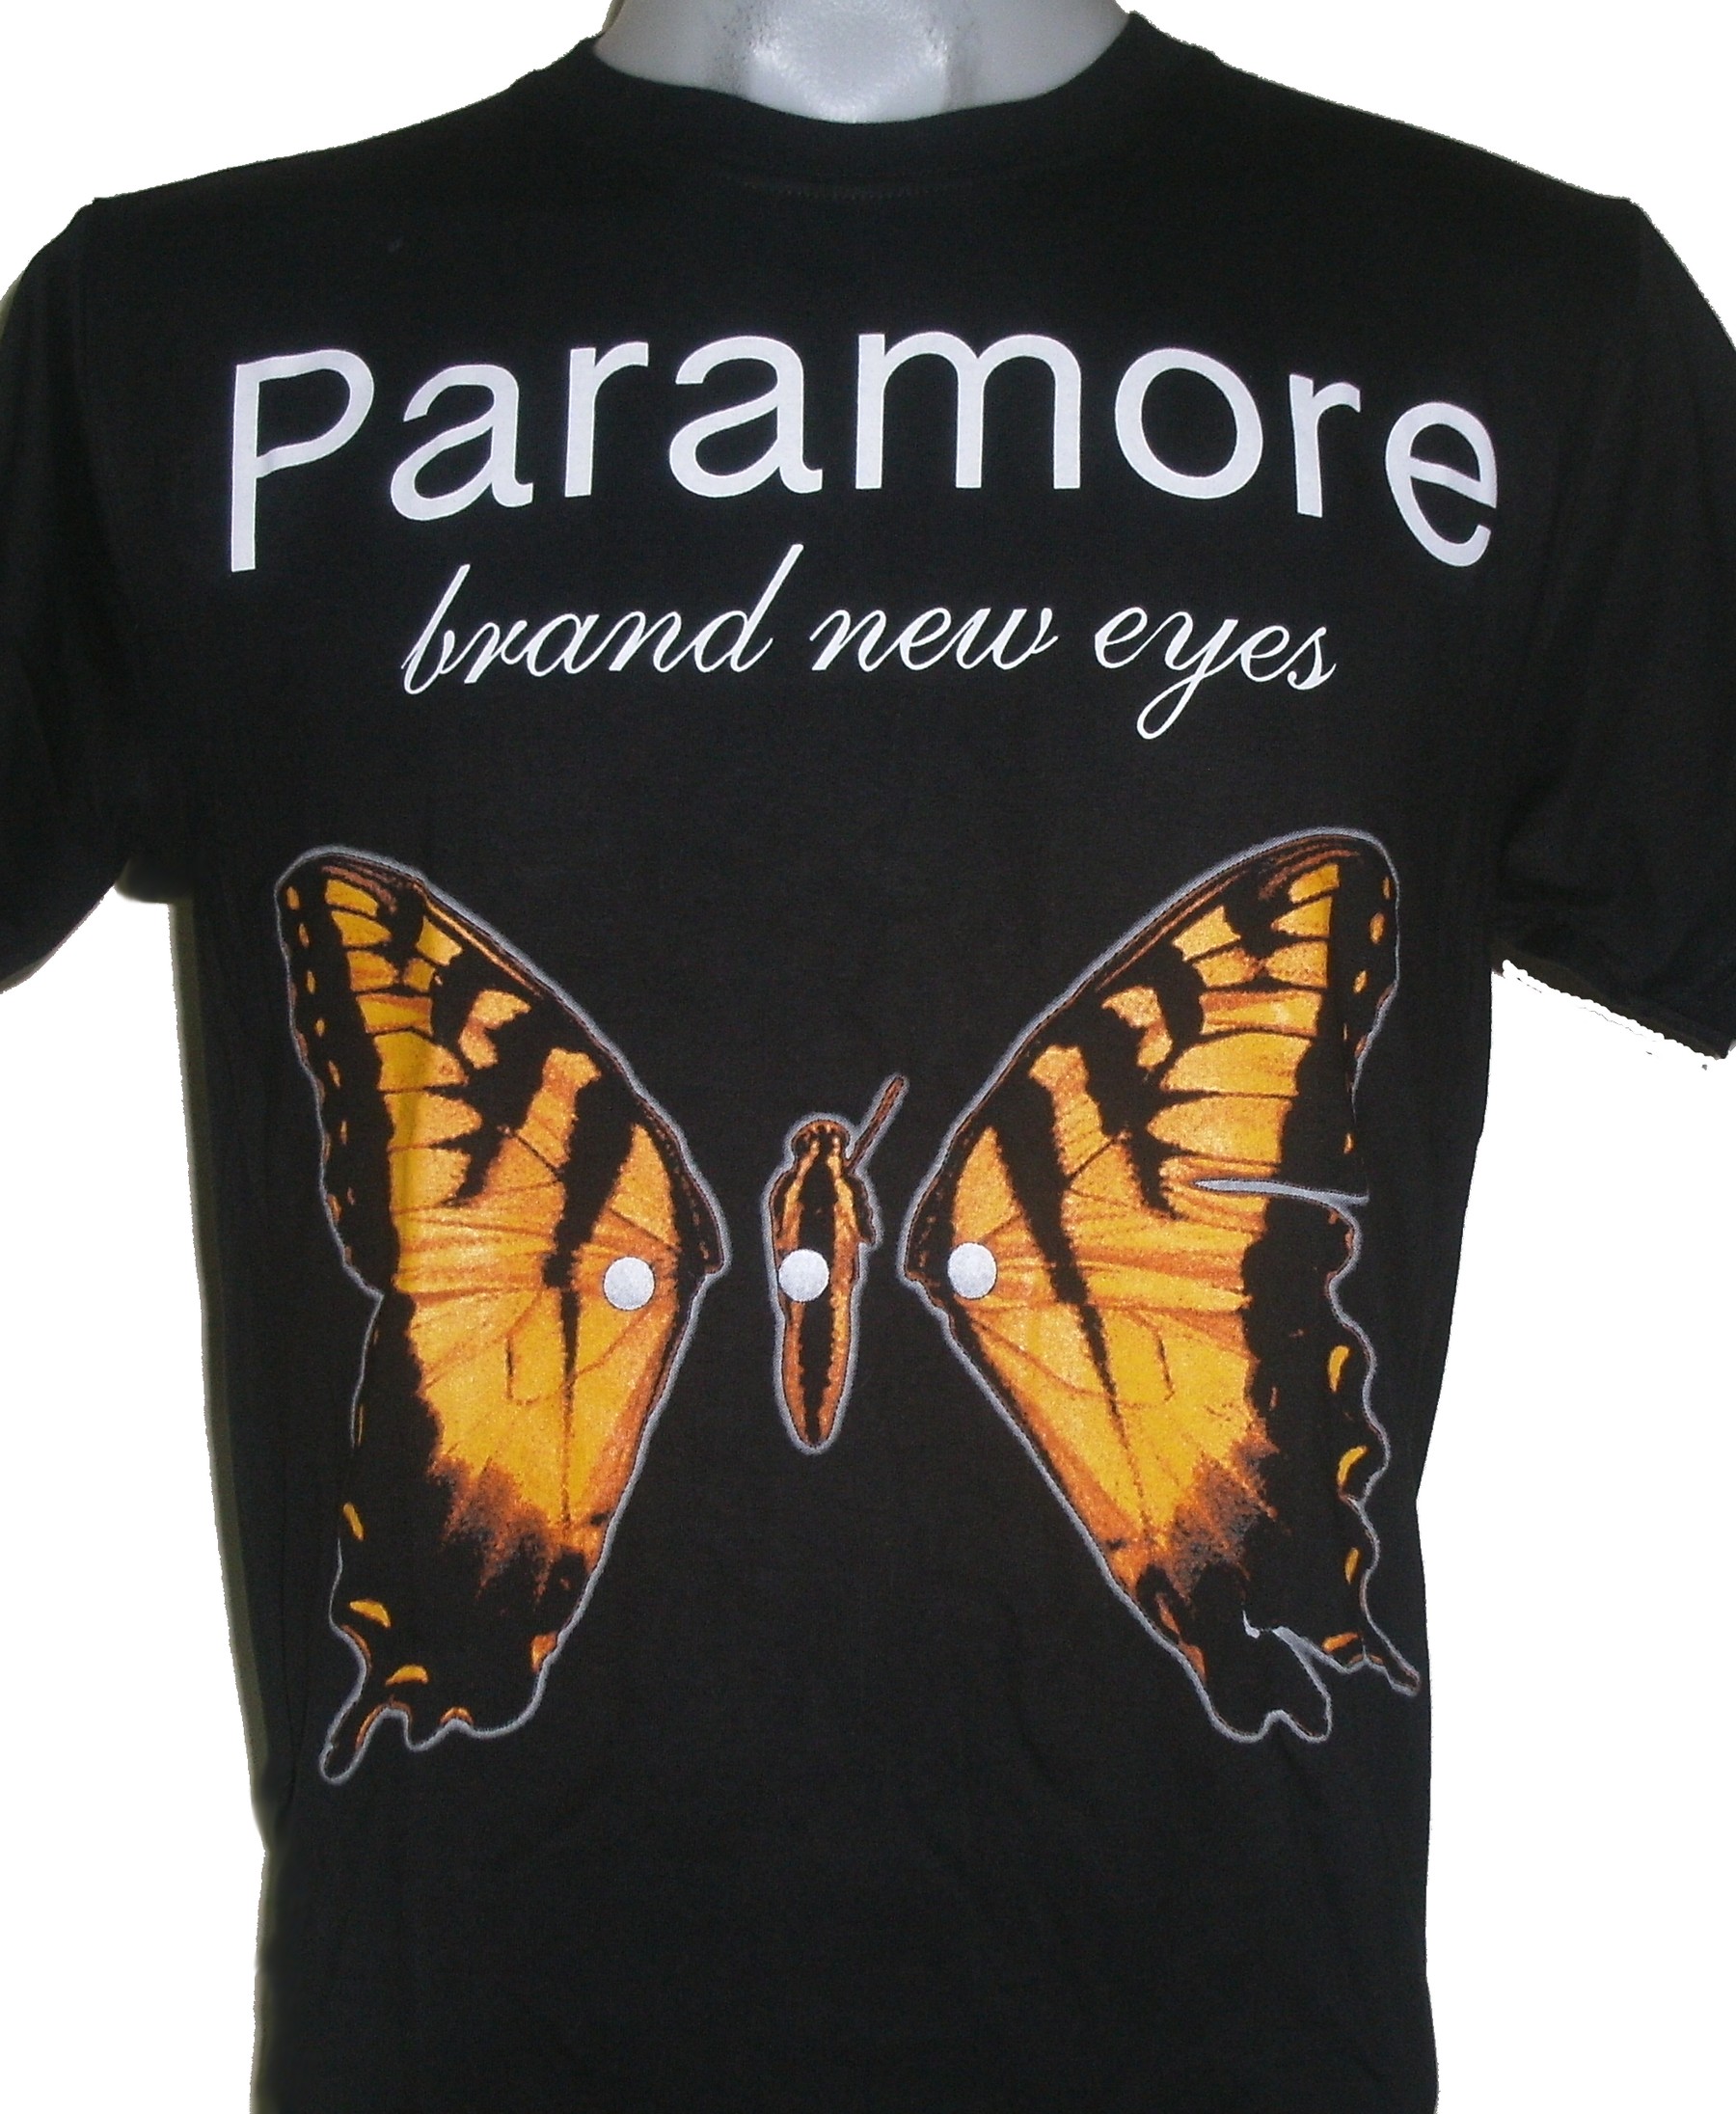 Paramore T-shirt Medium - Brand New Eyes UK tour 2010